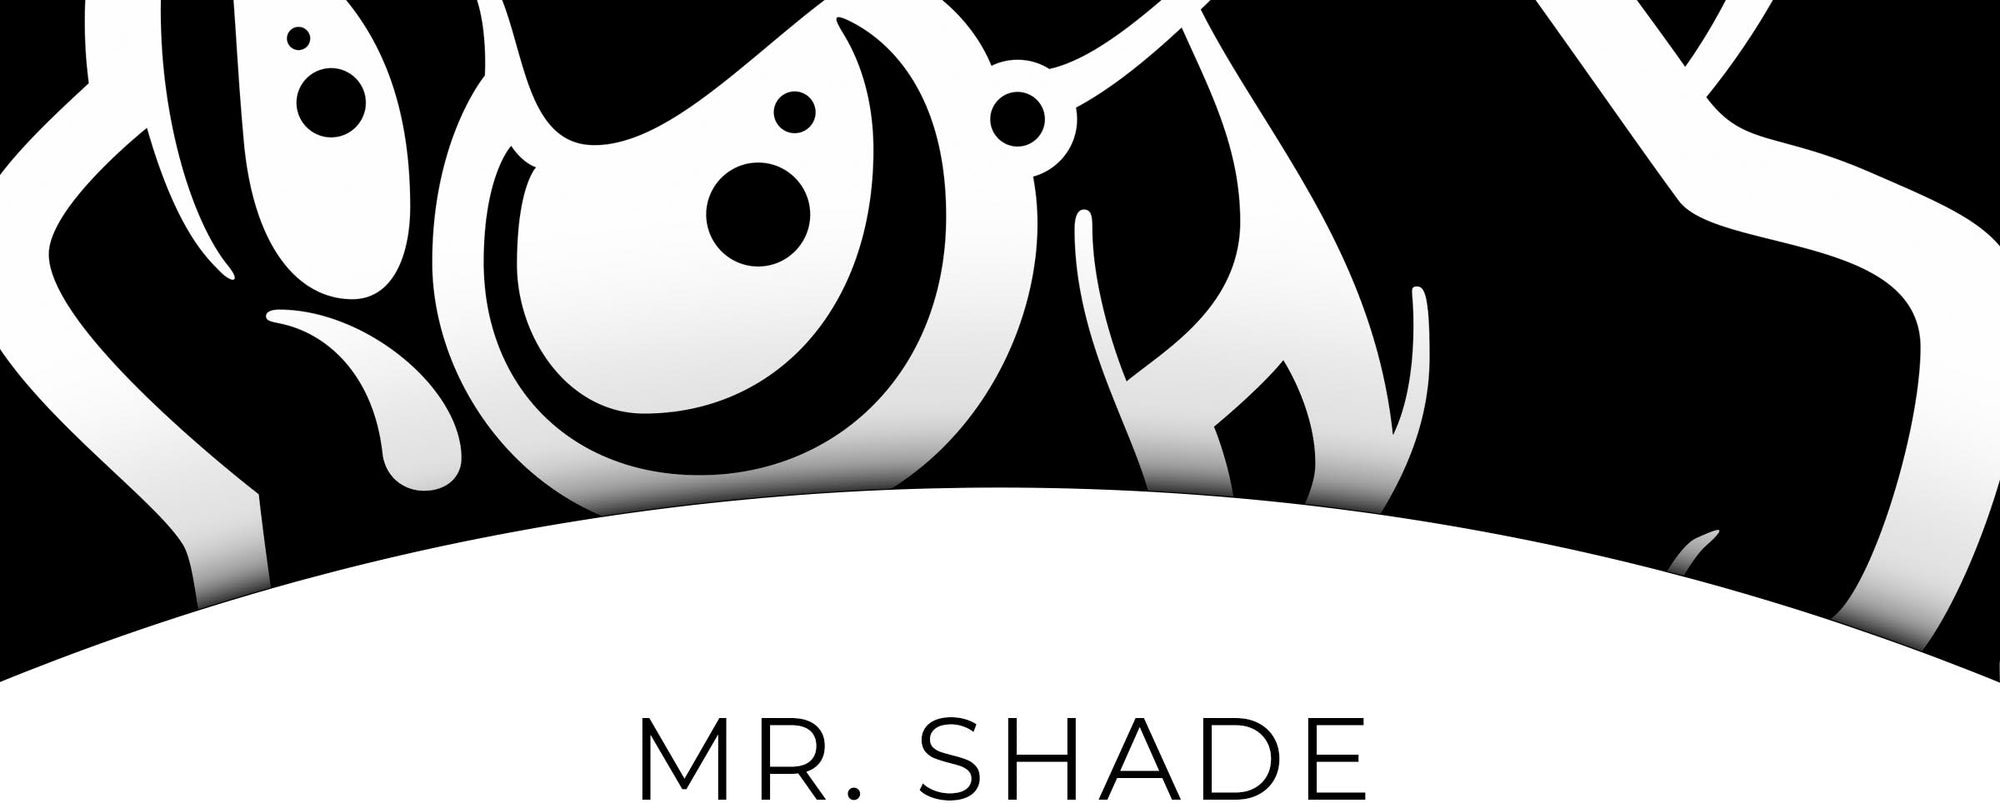 MR. SHADE